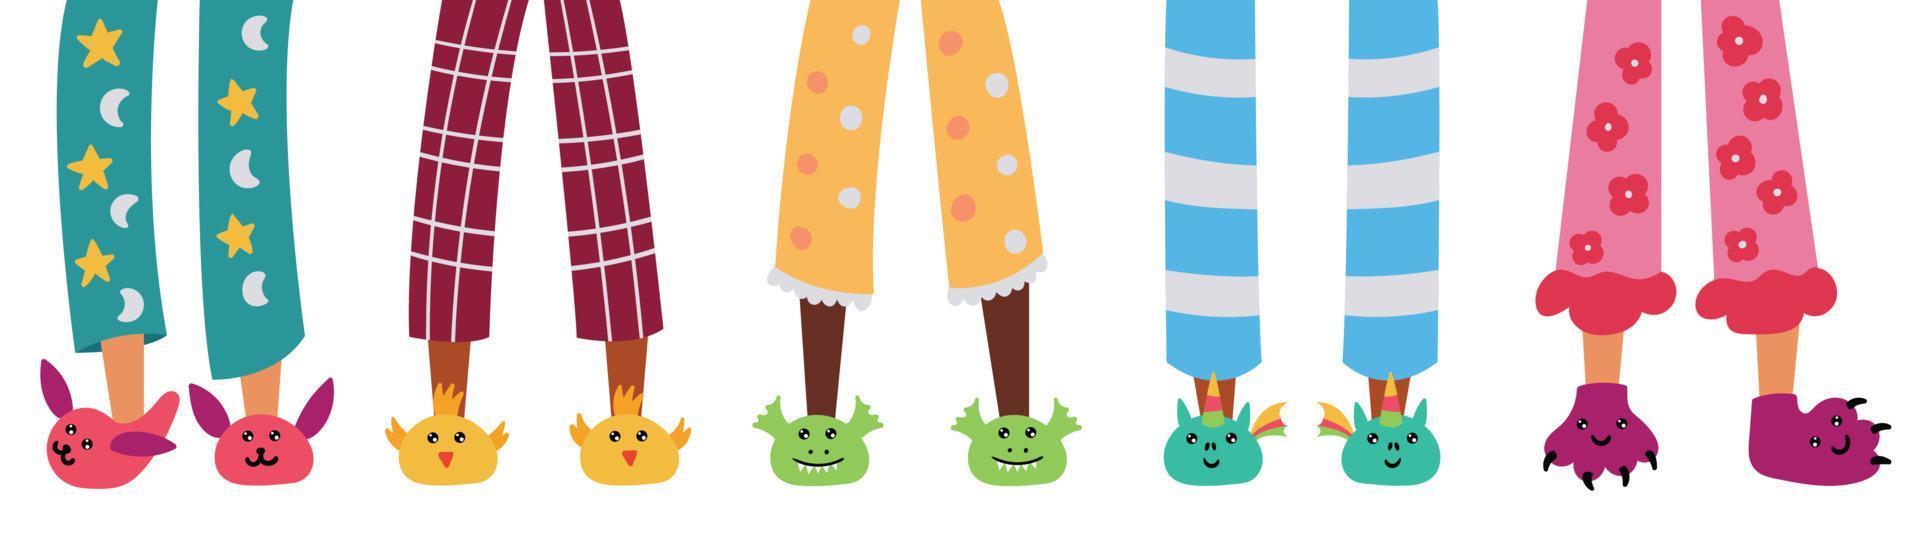 Set of children pajama slippers vector